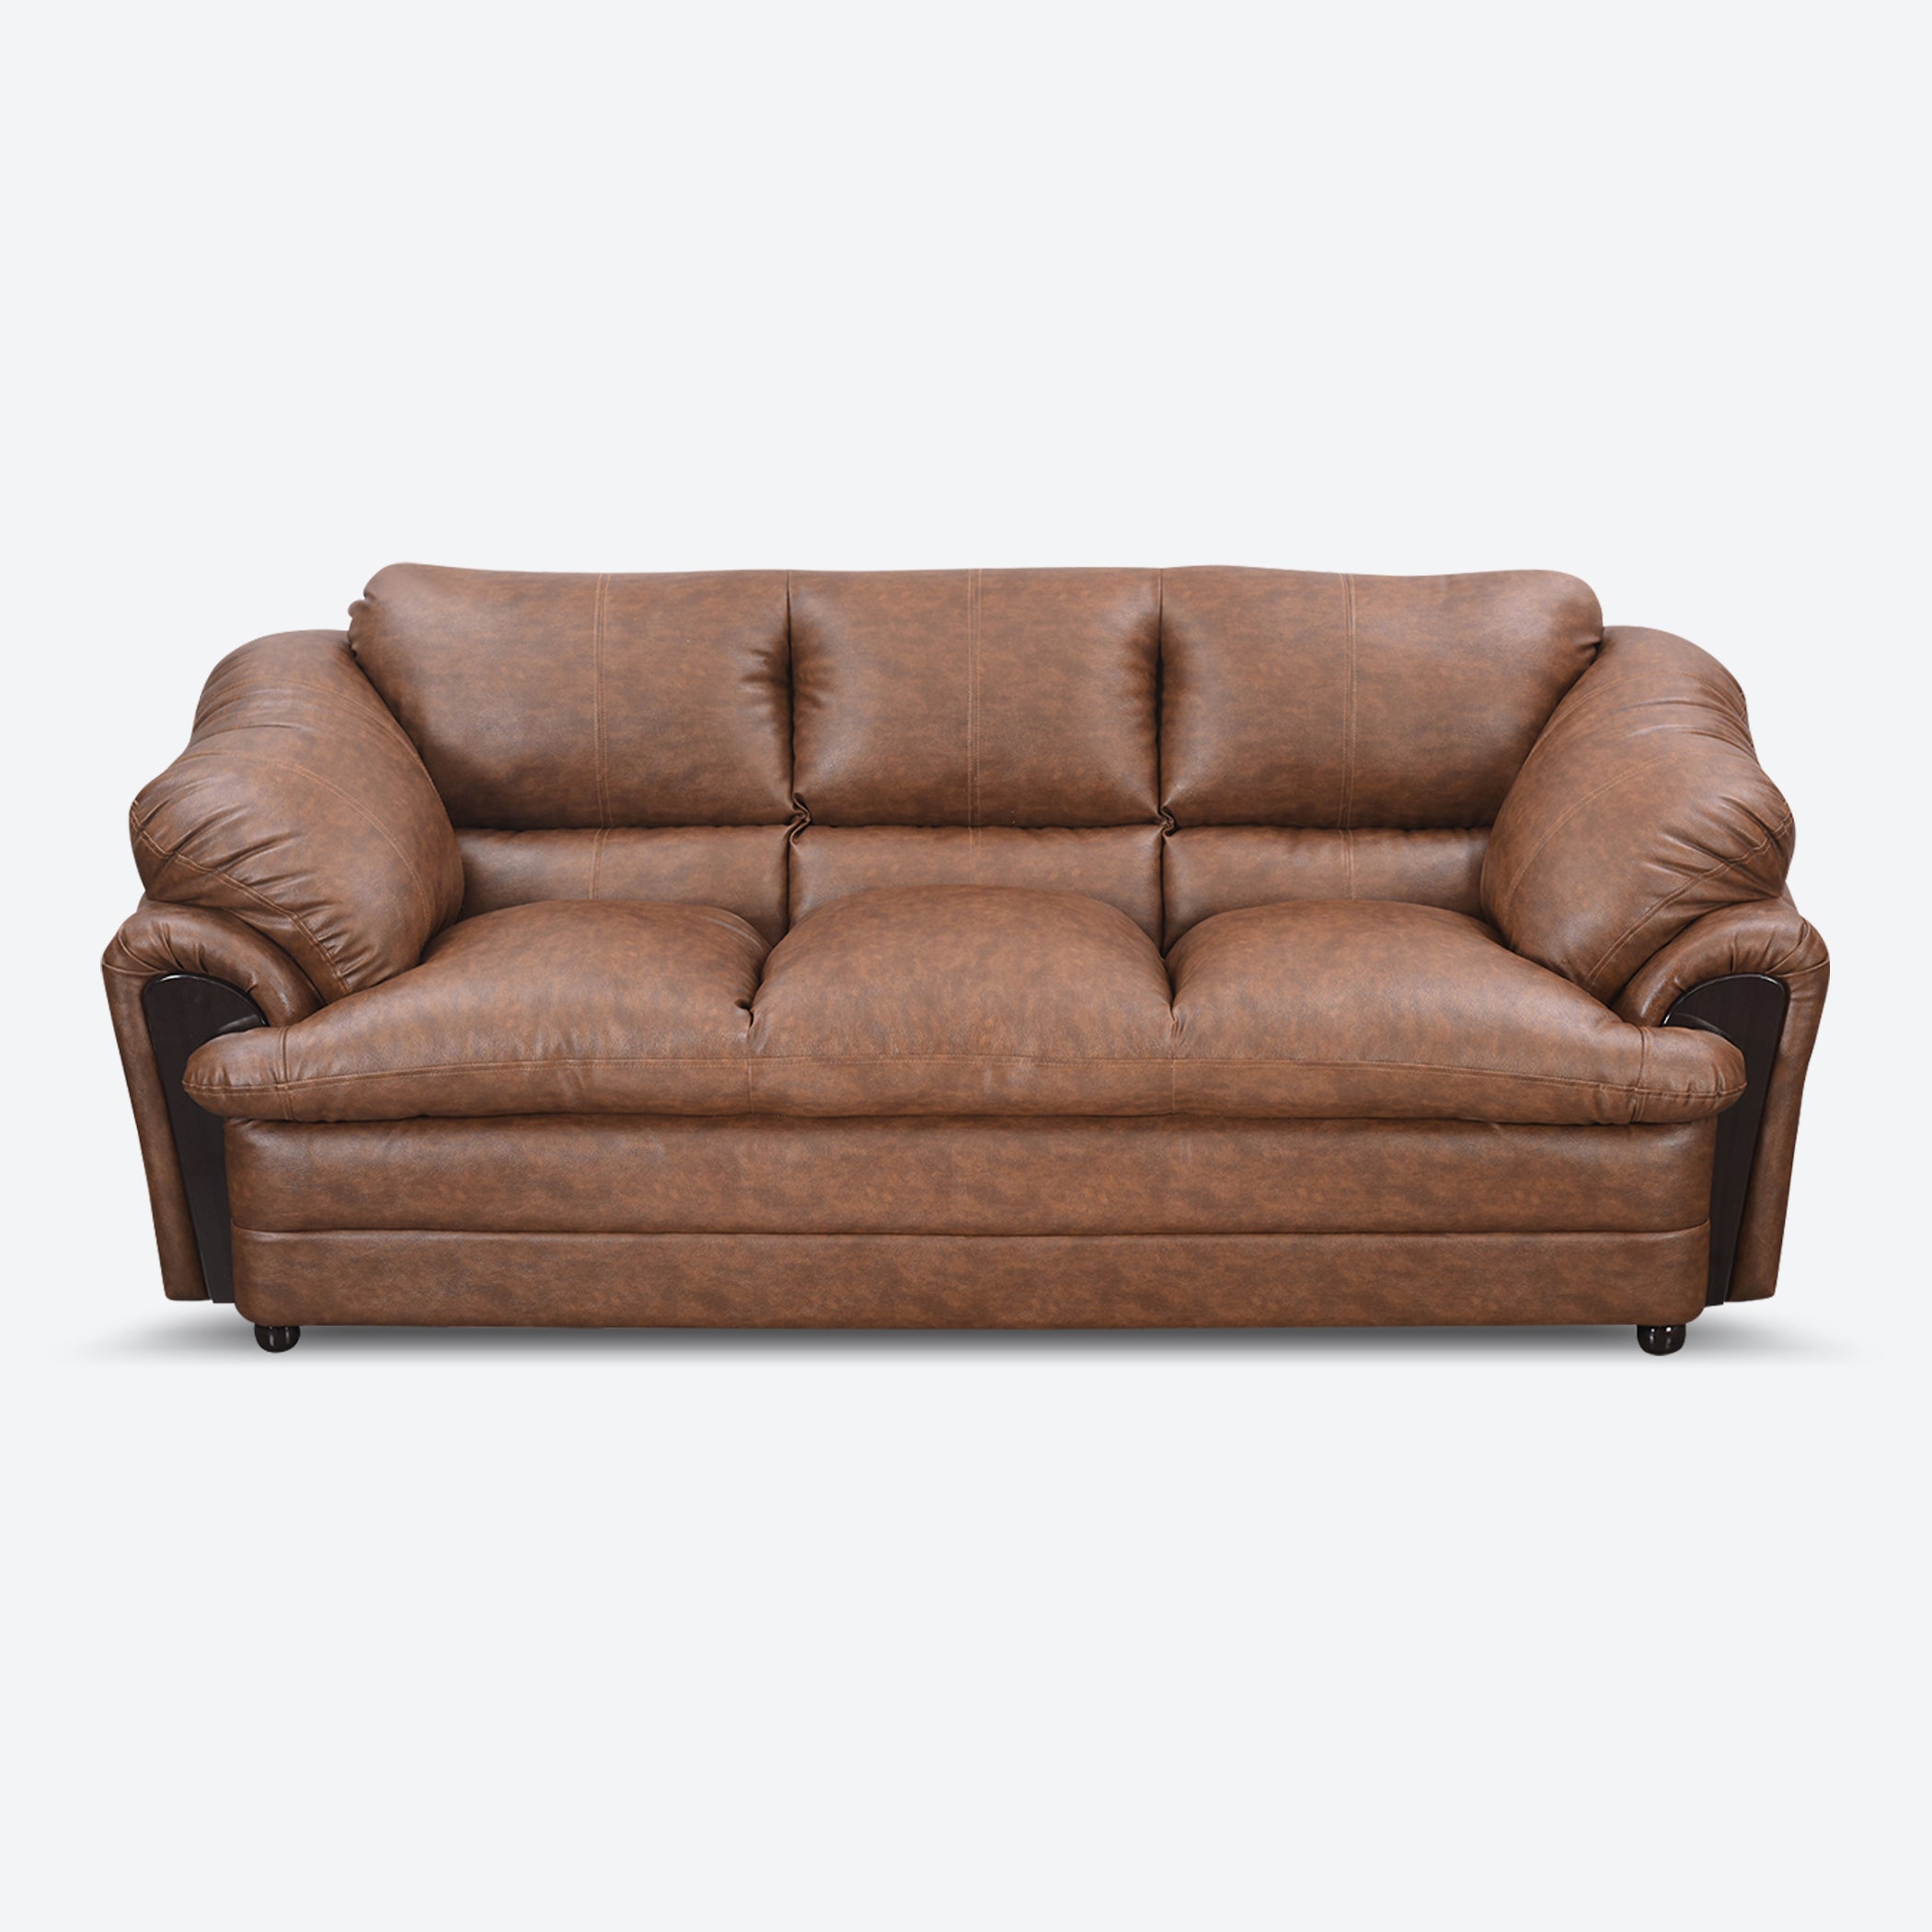 Coppenhagen Brown 3S Sofa by Zorin Zorin